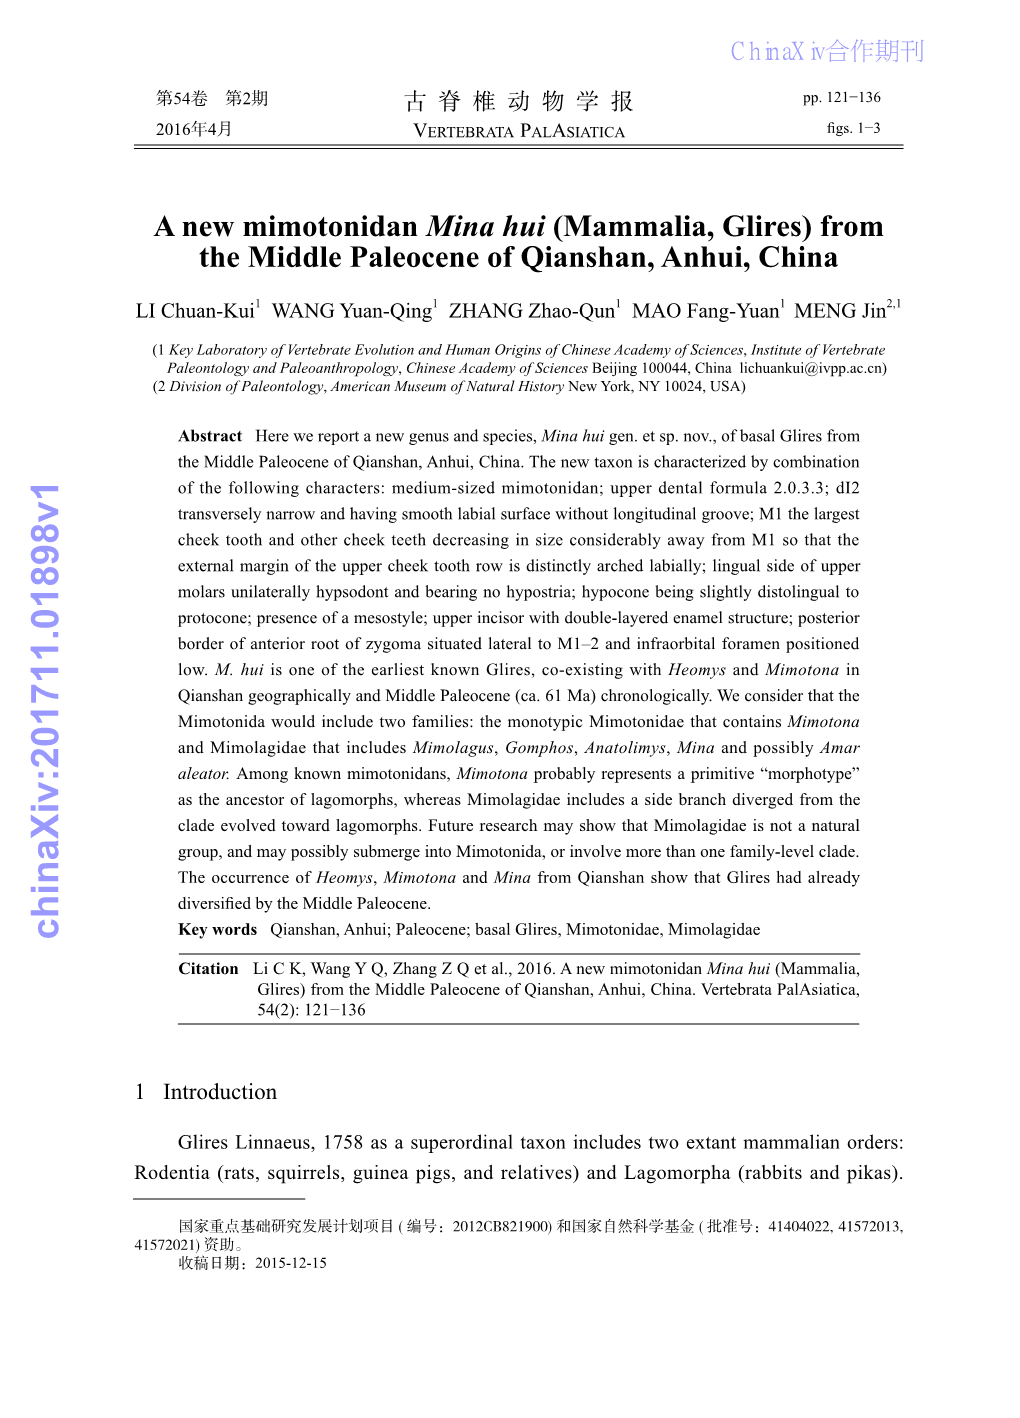 Mammalia, Glires) from the Middle Paleocene of Qianshan, Anhui, China